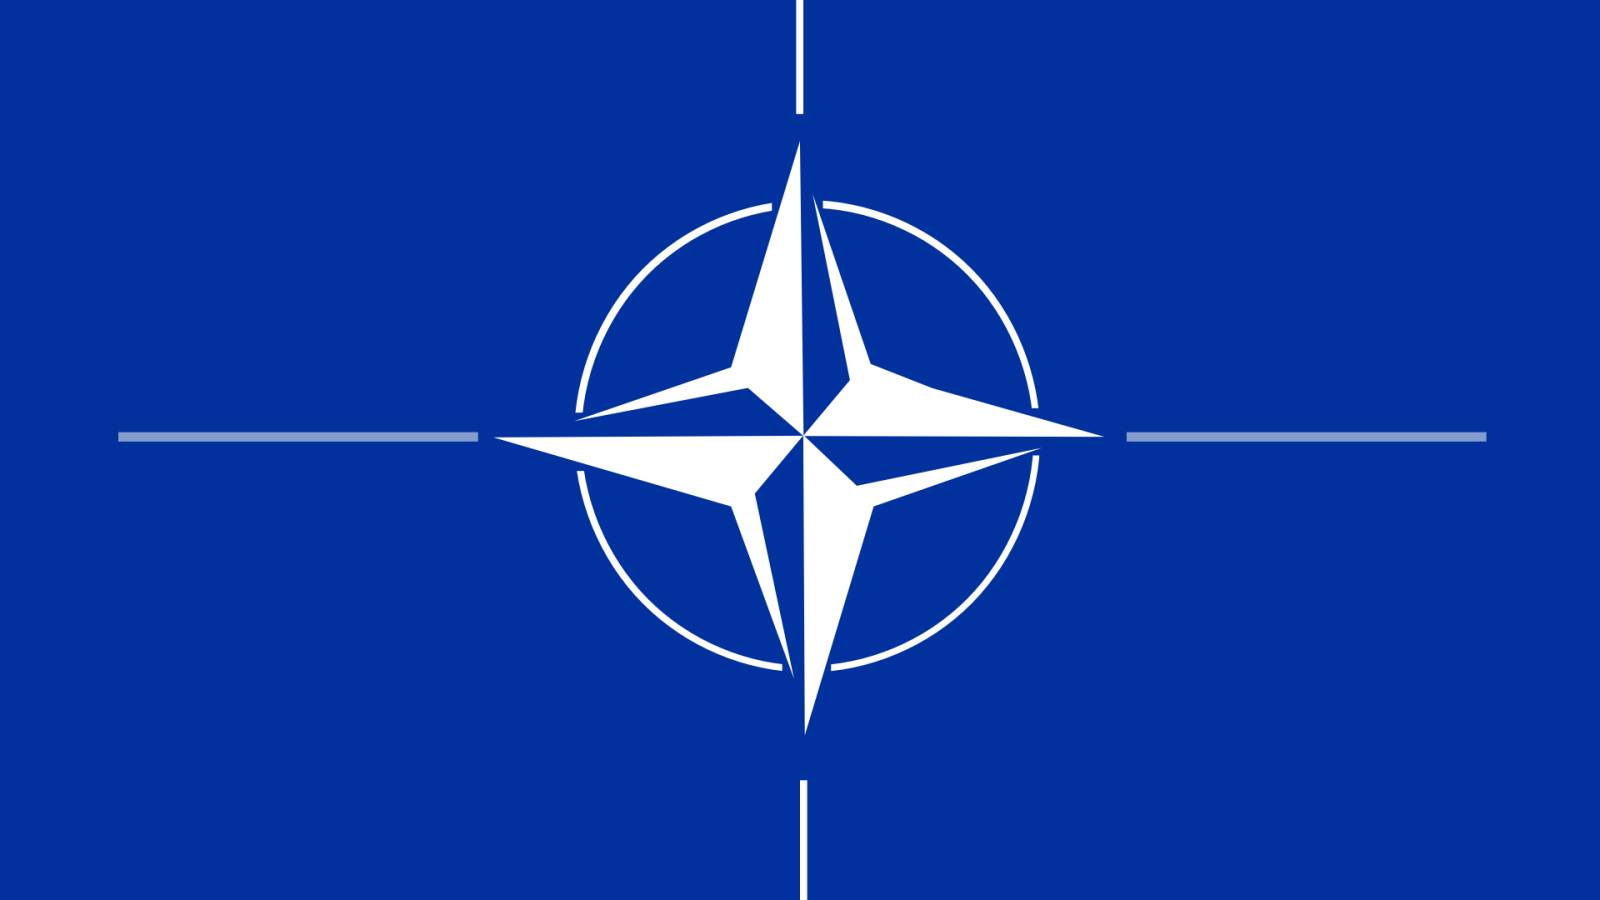 NAVO-aankondiging met betrekking tot de claims van Rusland met betrekking tot het gebruik van een "vuile bom" in Oekraïne